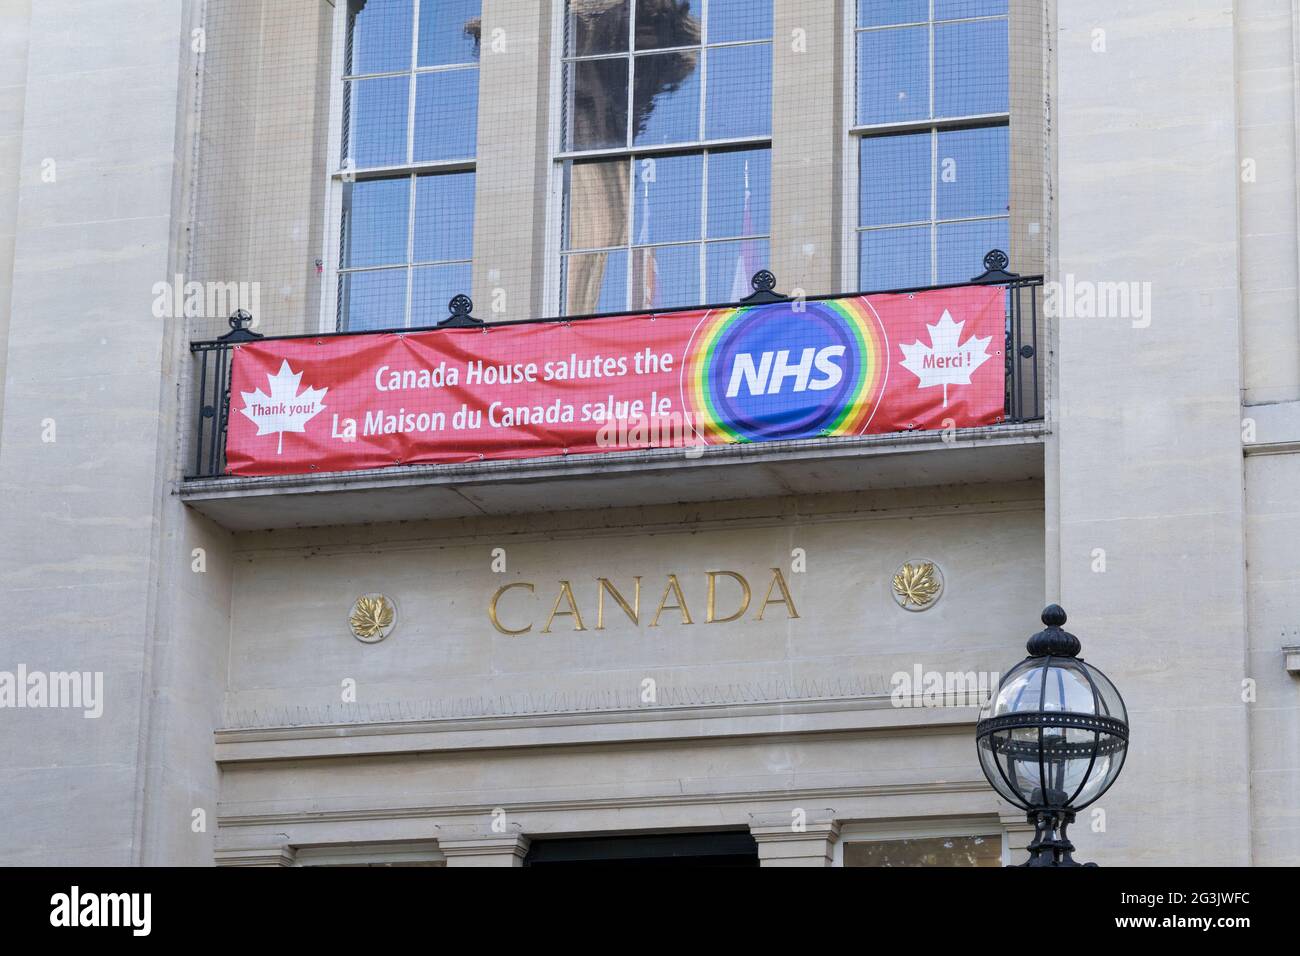 Canada House begrüßt NHS, danke, London, Trafalgar Square, England Stockfoto